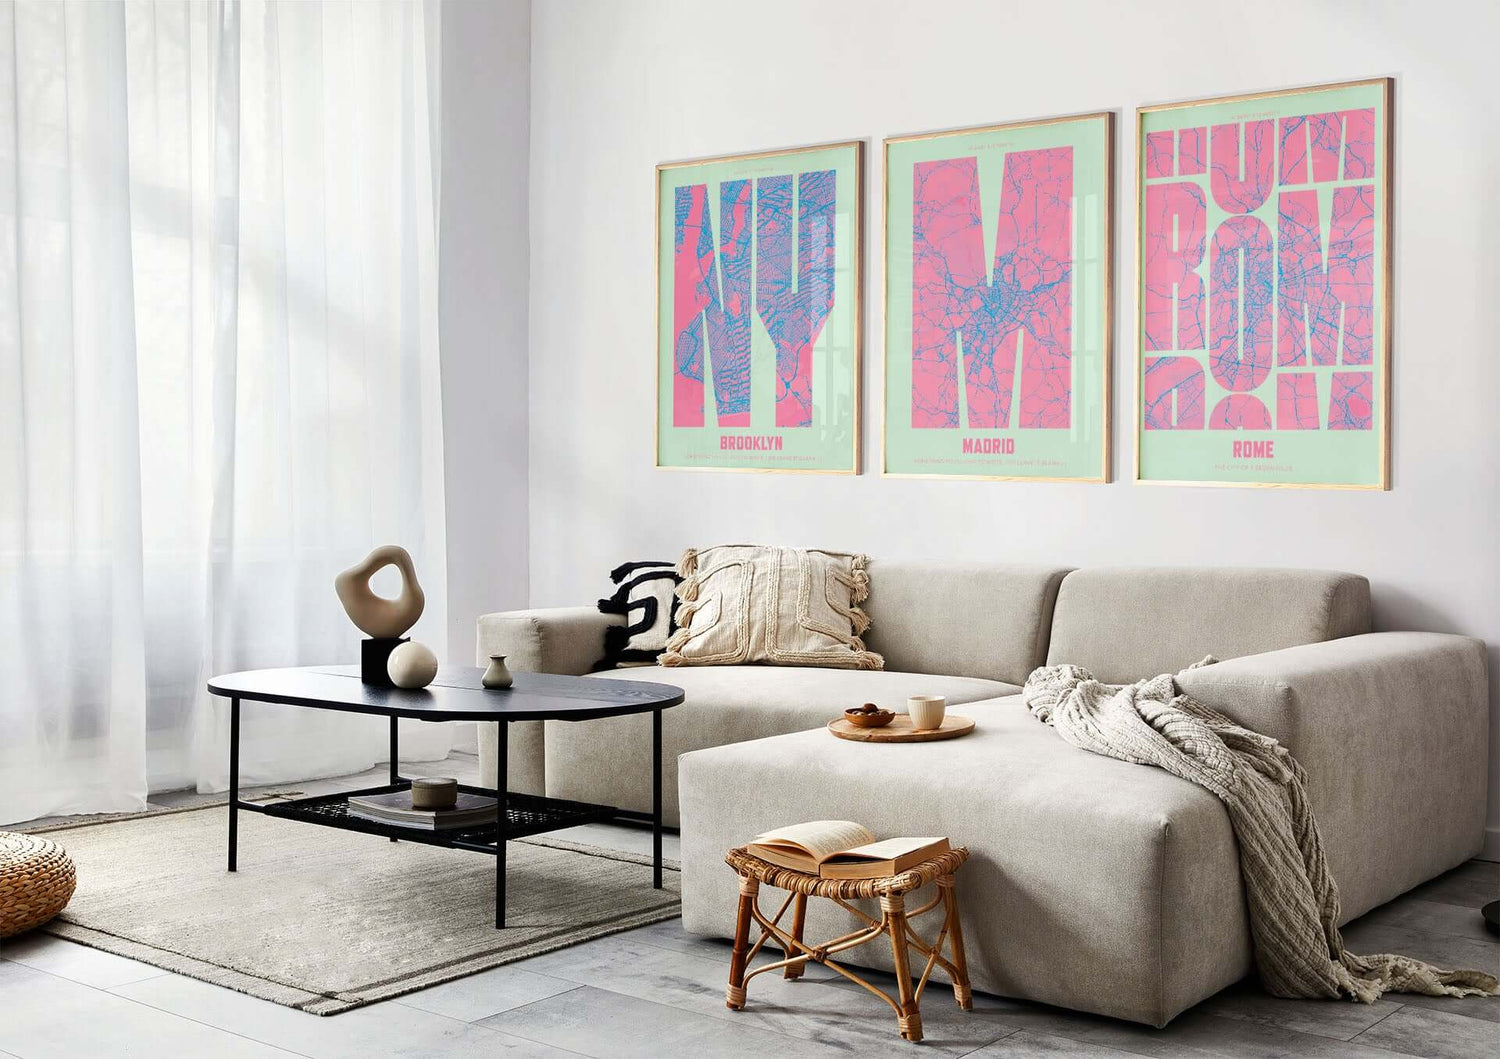 Decorative prints LetraMap in a living room